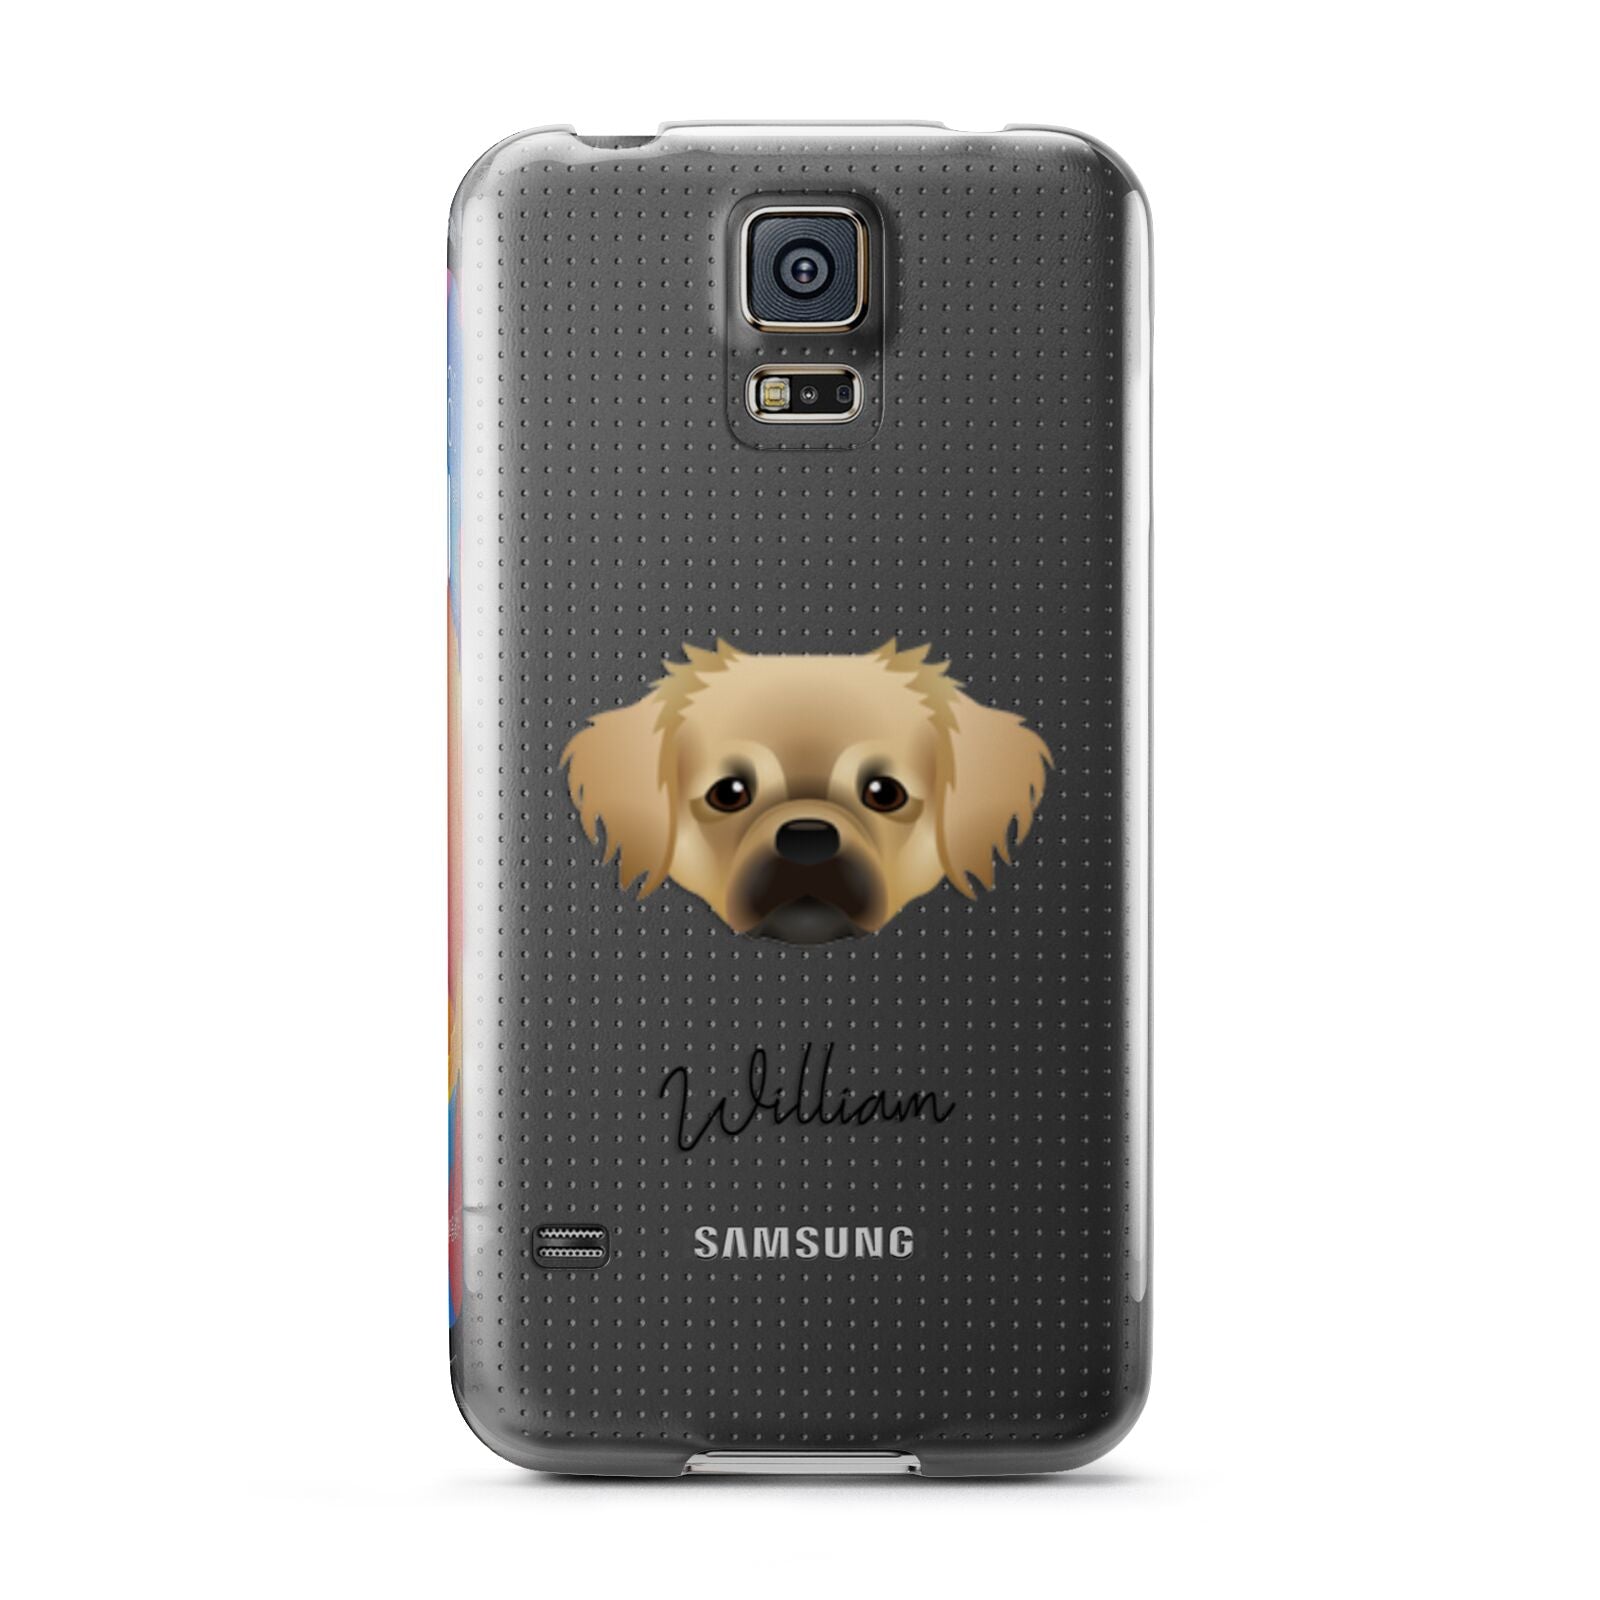 Tibetan Spaniel Personalised Samsung Galaxy S5 Case